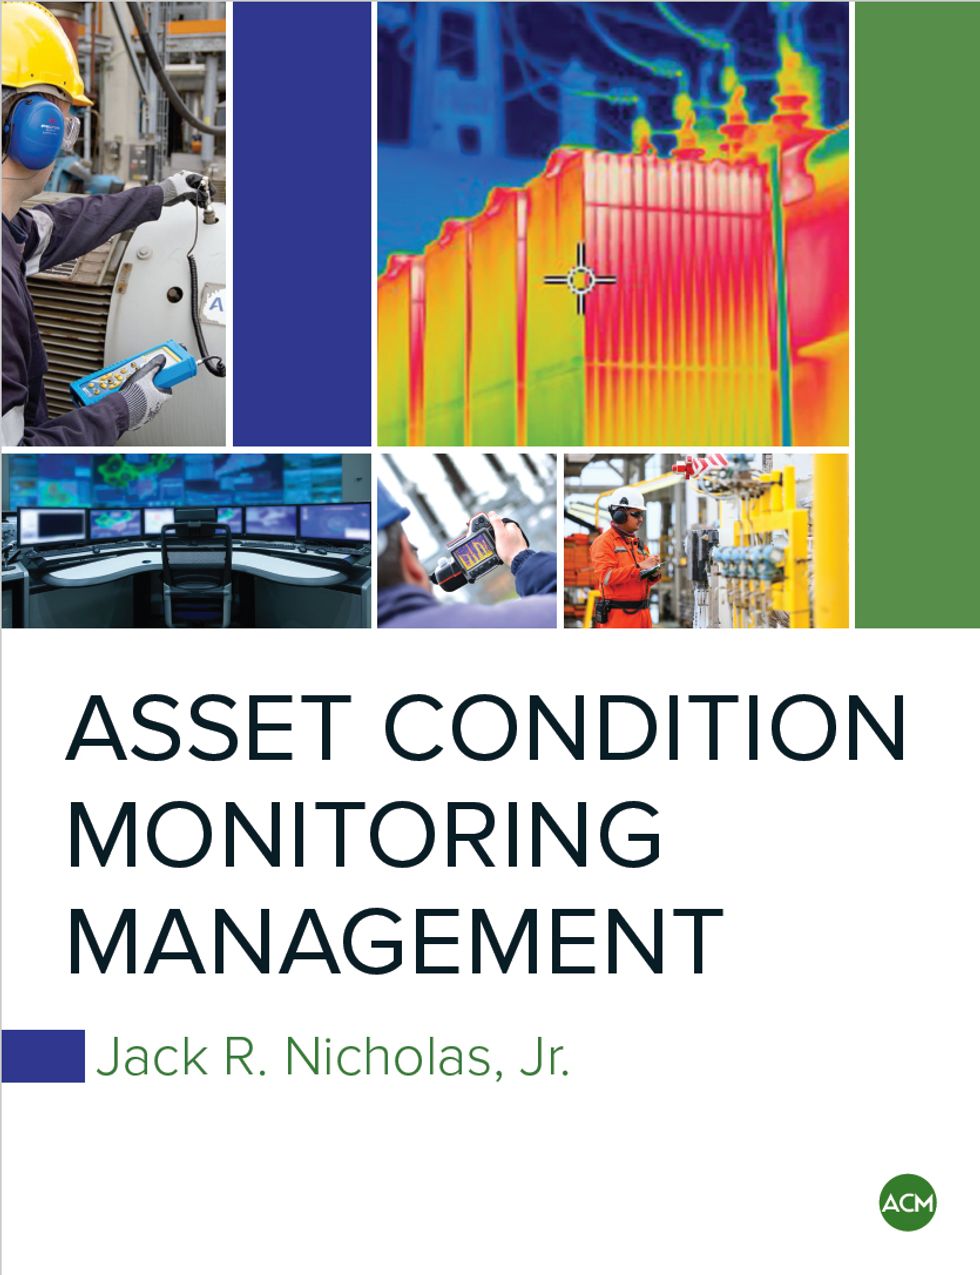  Asset Condition Monitoring Management 